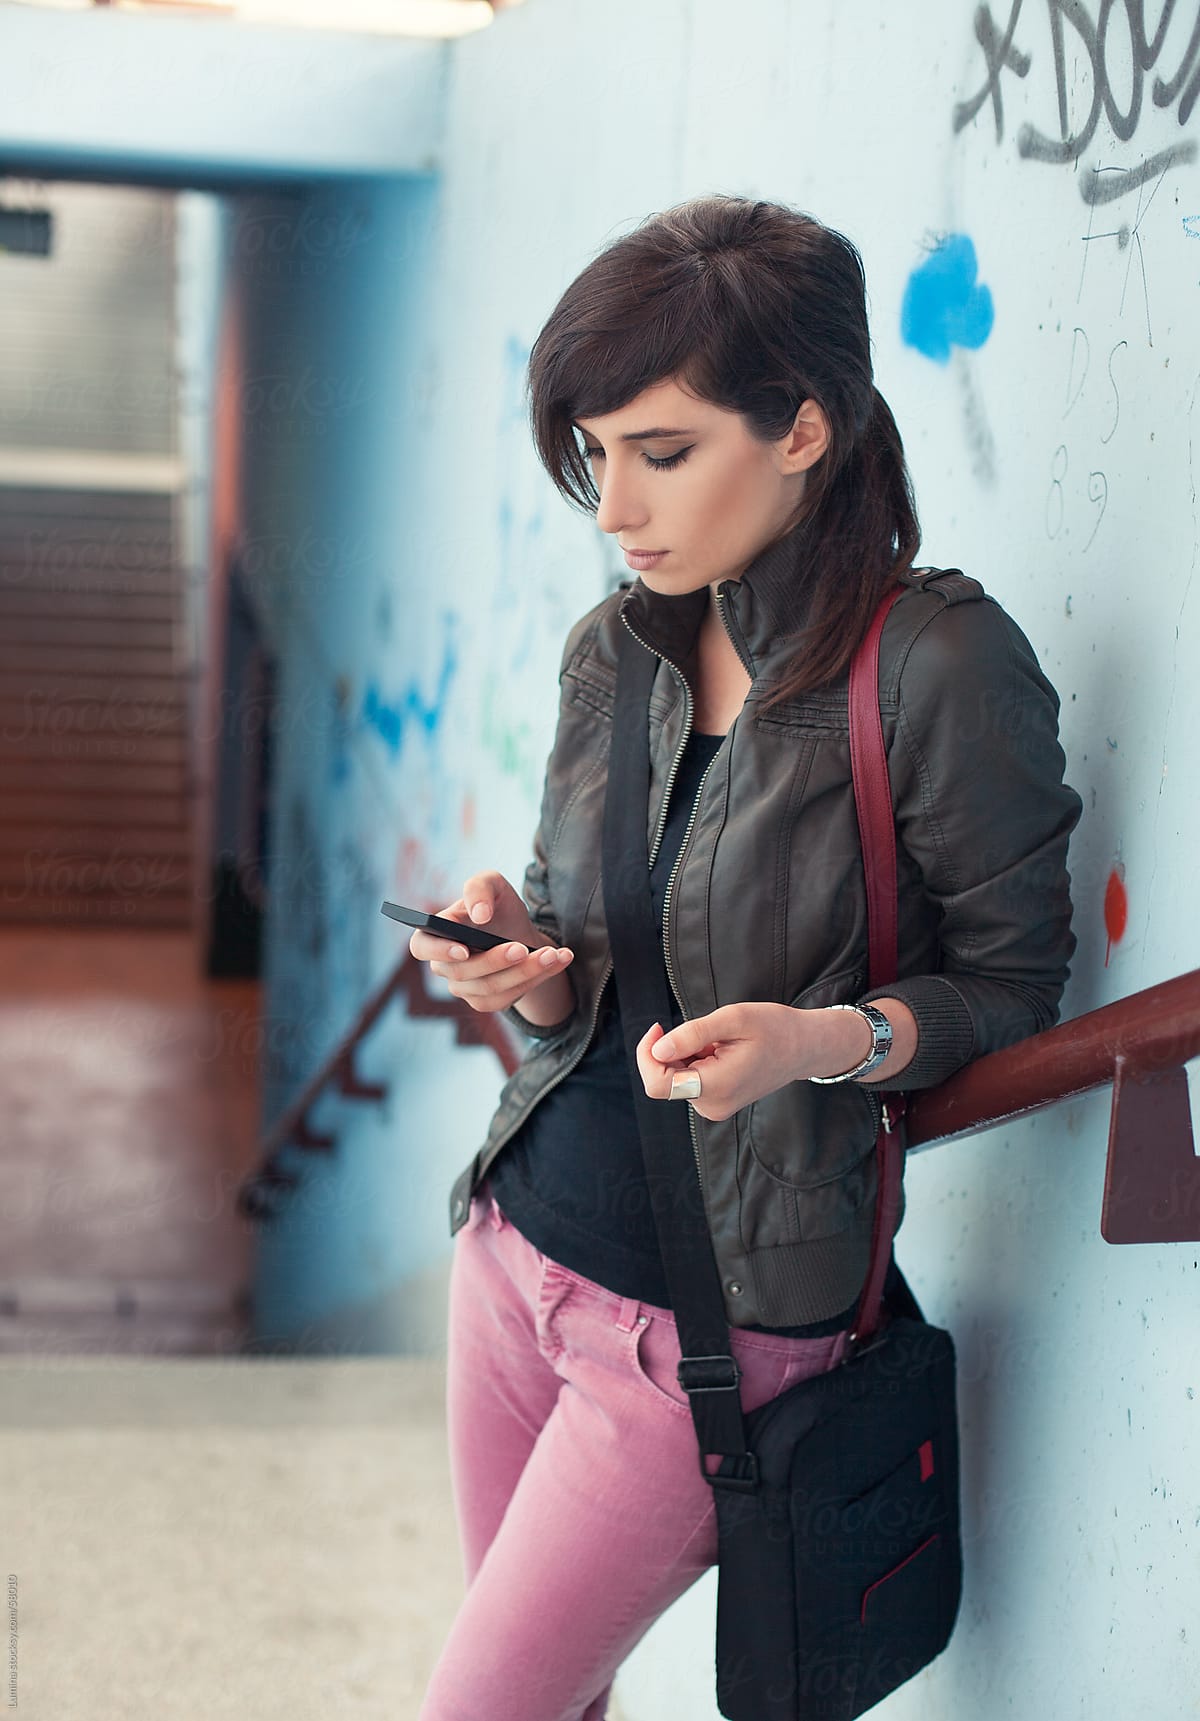 Woman Texting by a Graffiti Wall